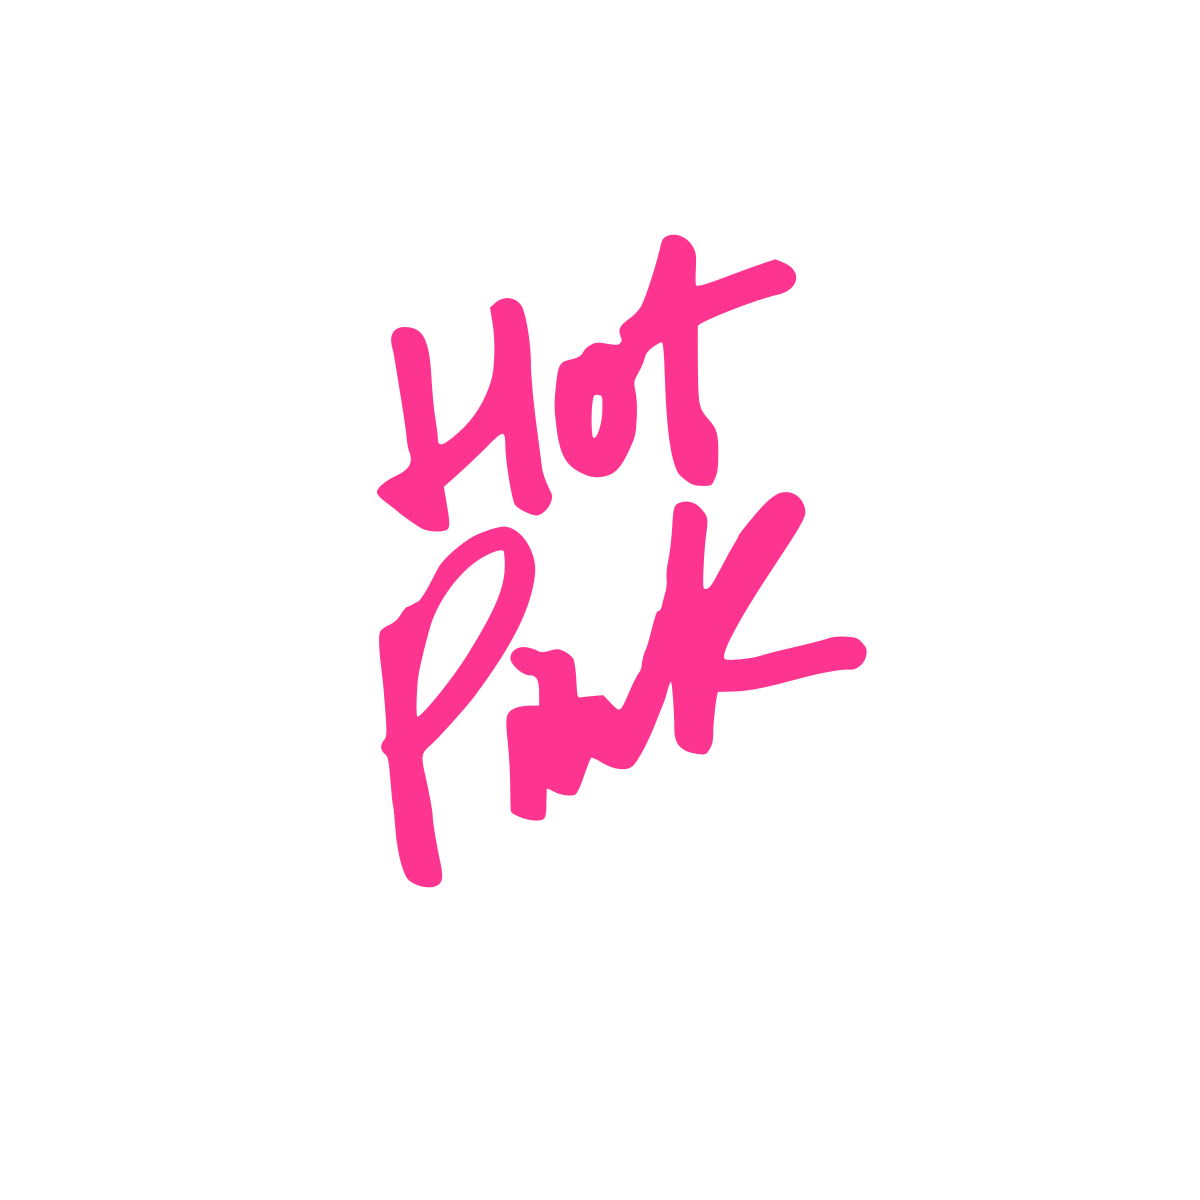 Doja Cat - Hot Pink